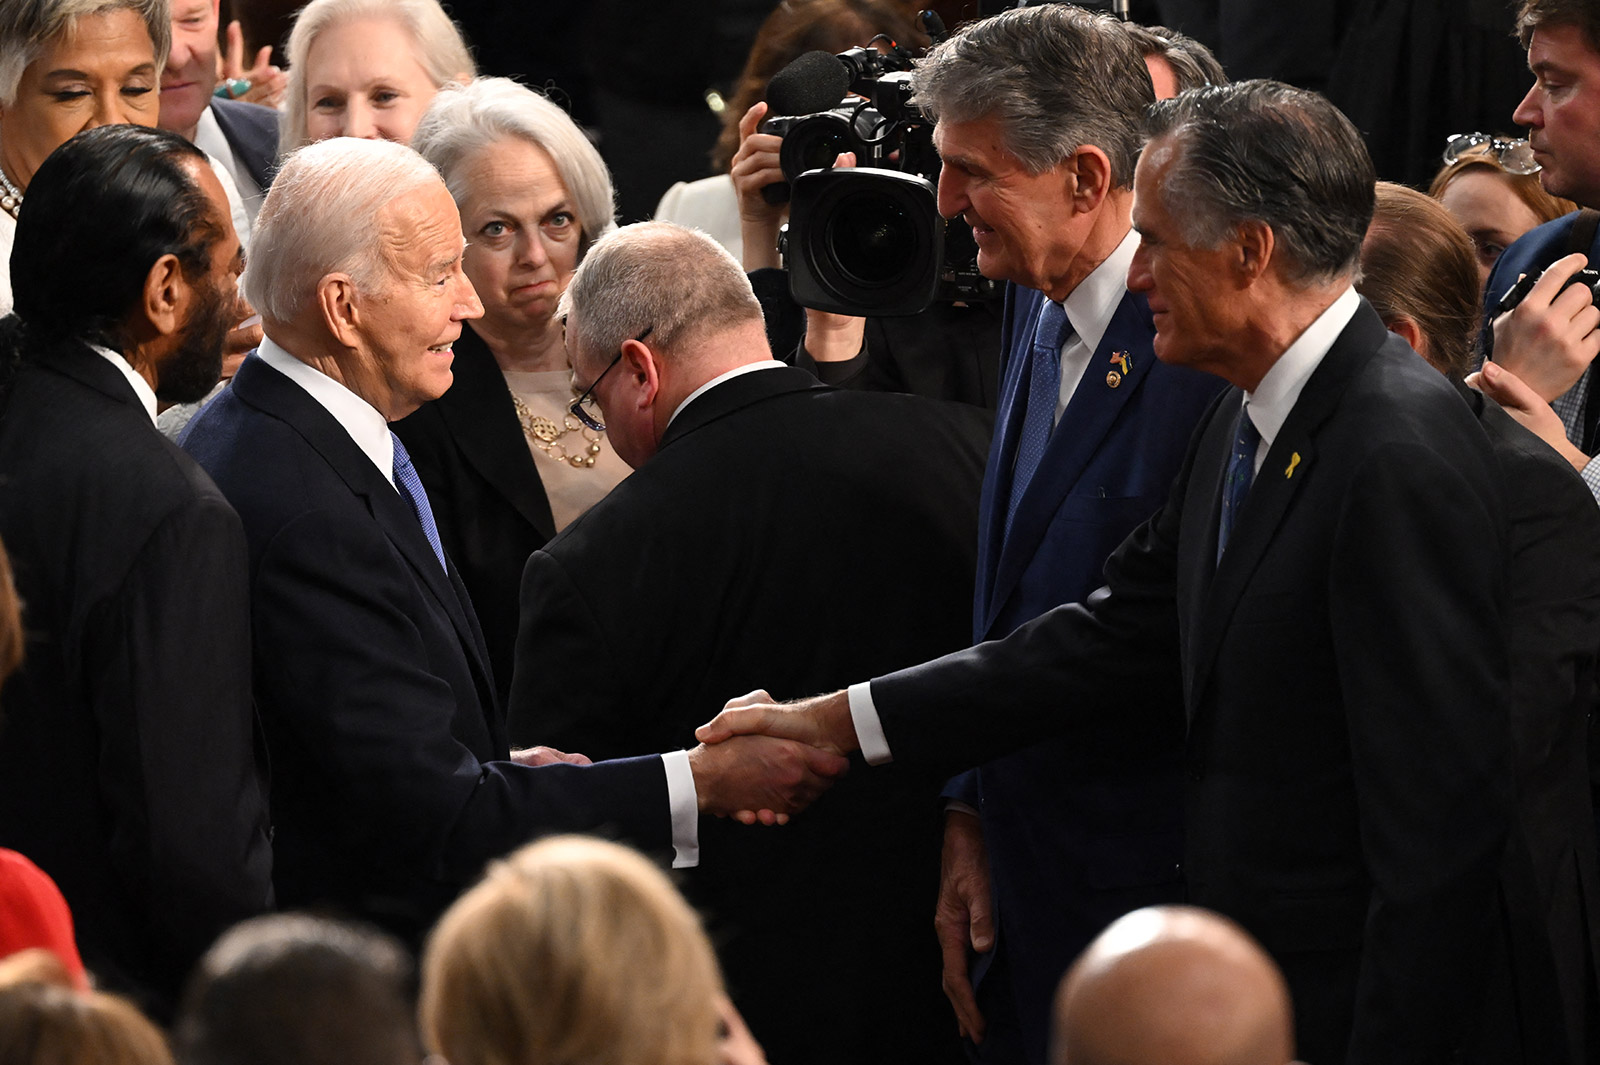 Biden speaks with Sen. Mitt Romney and Sen. Joe Manchin as he arrives in the House chamber.